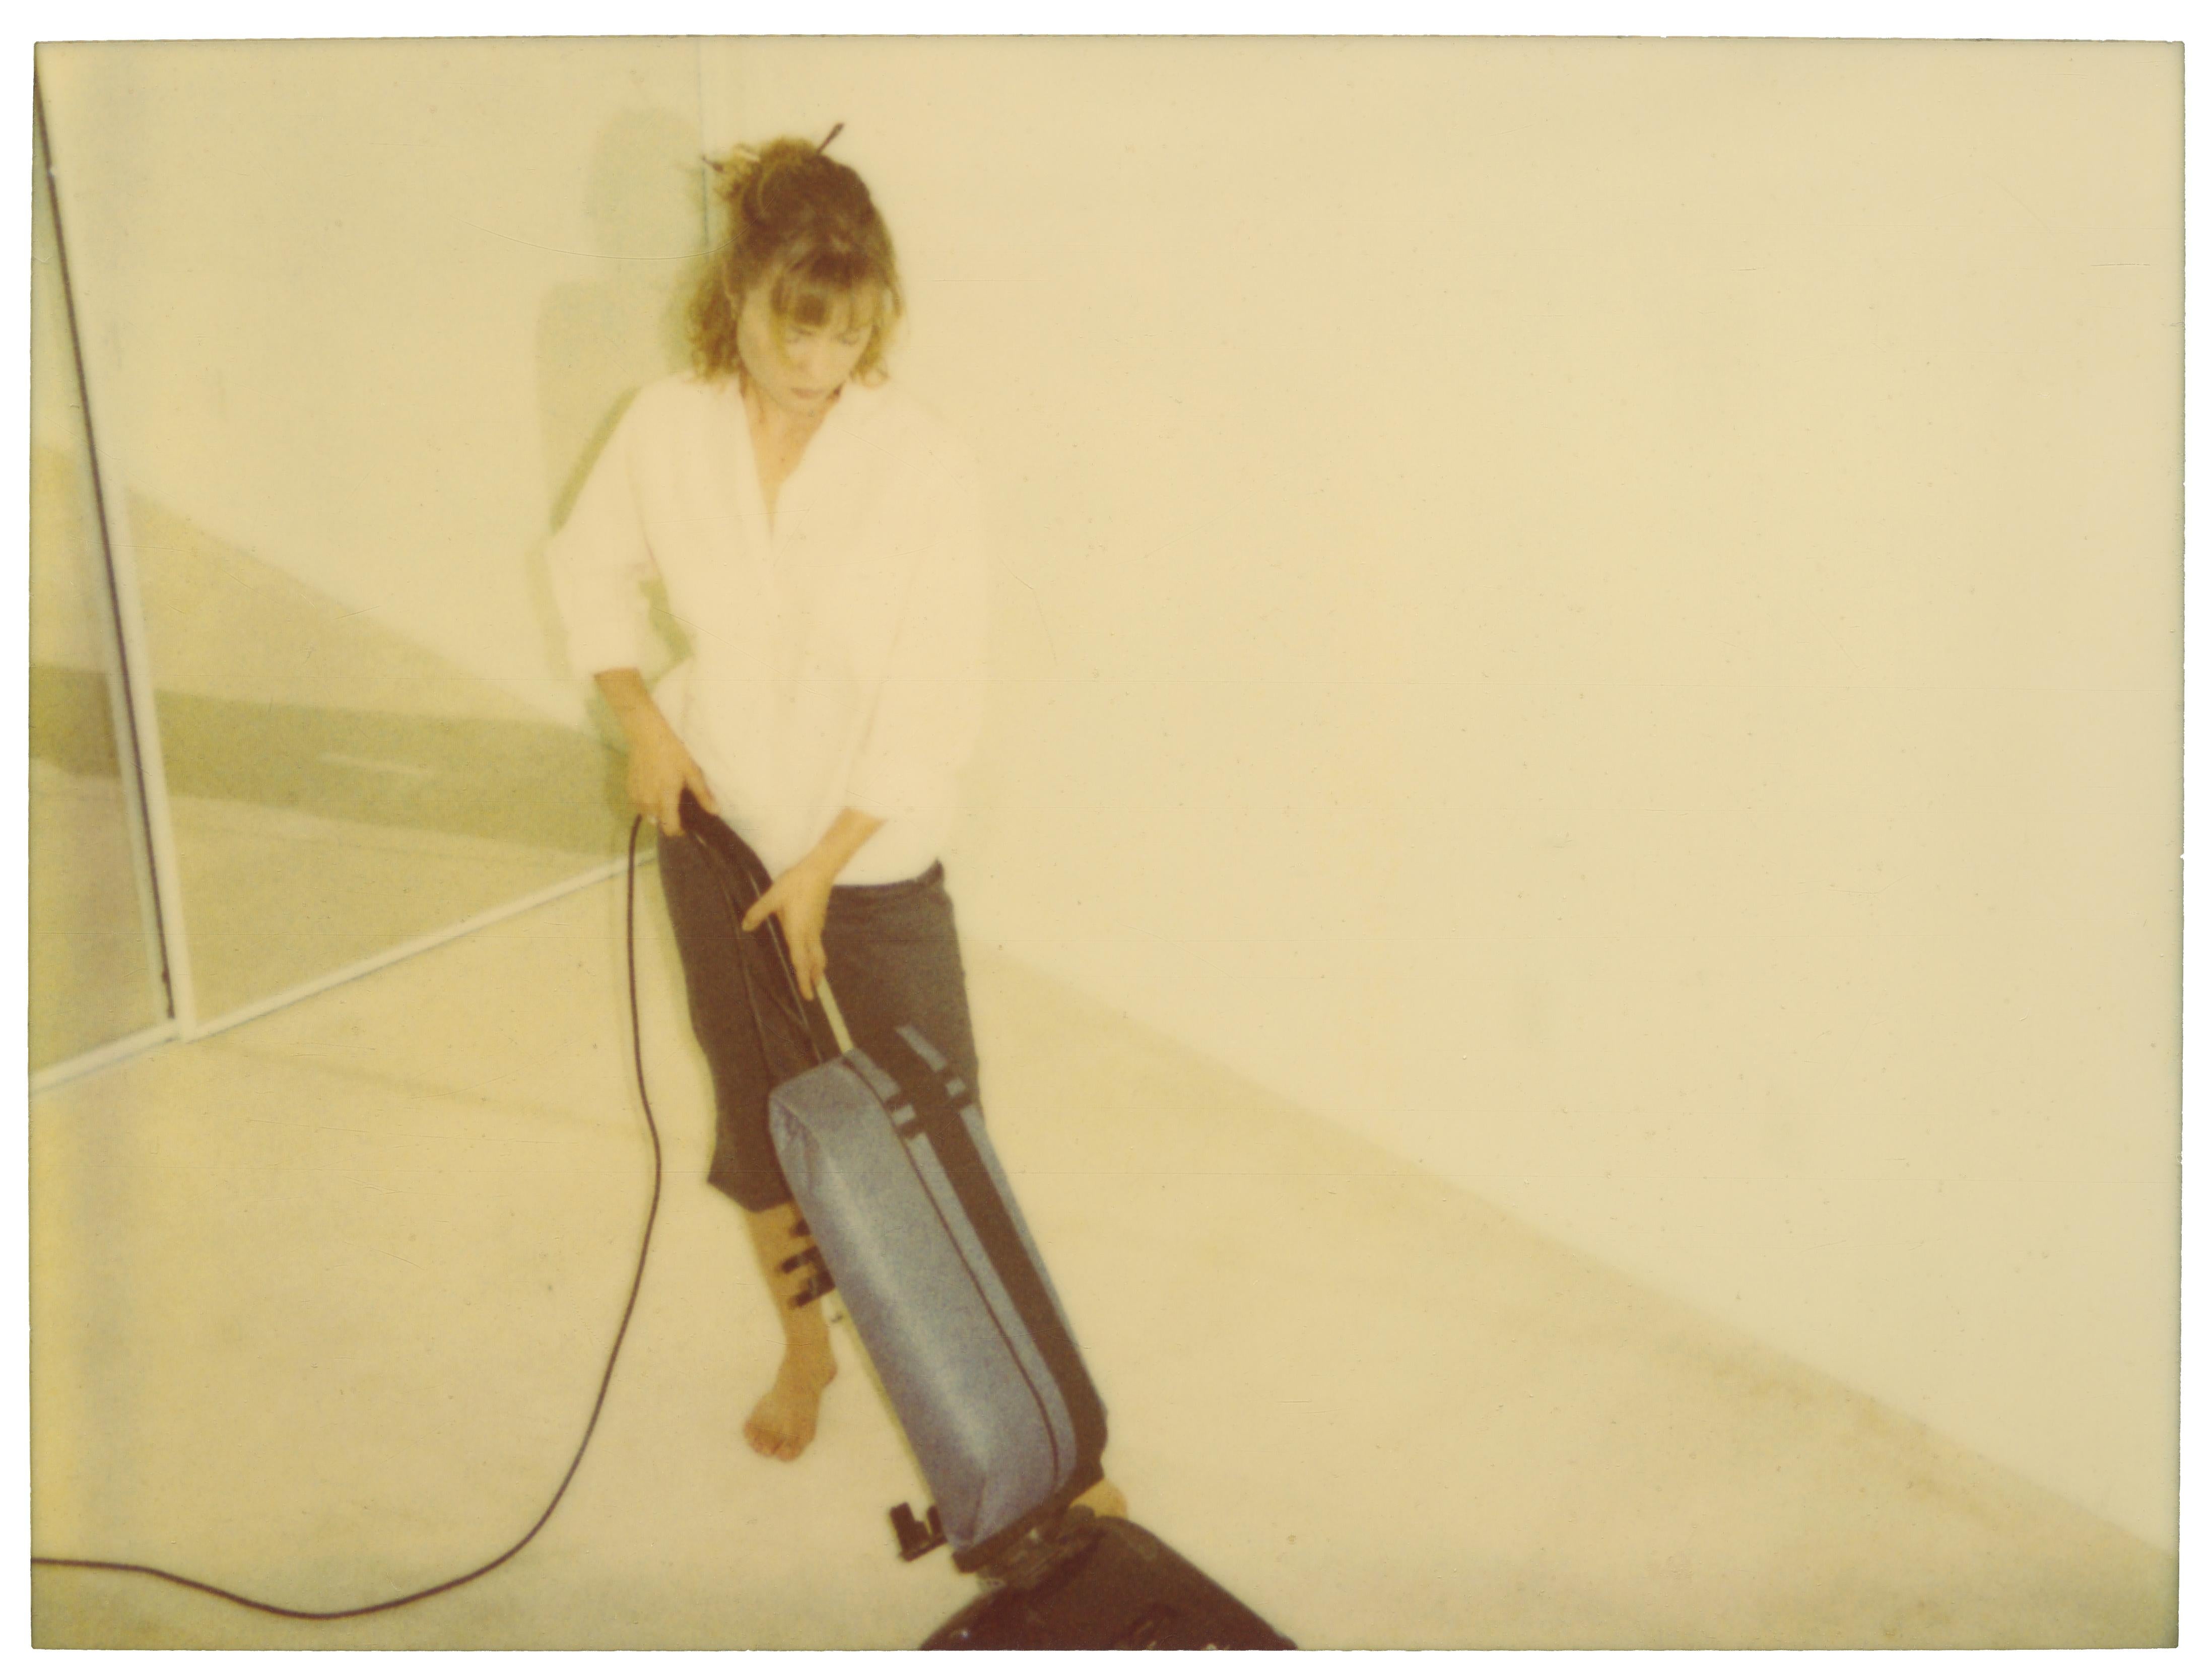 Housewife's Chores II (Suburbia) - Contemporary, Polaroid, Photography, Portrait